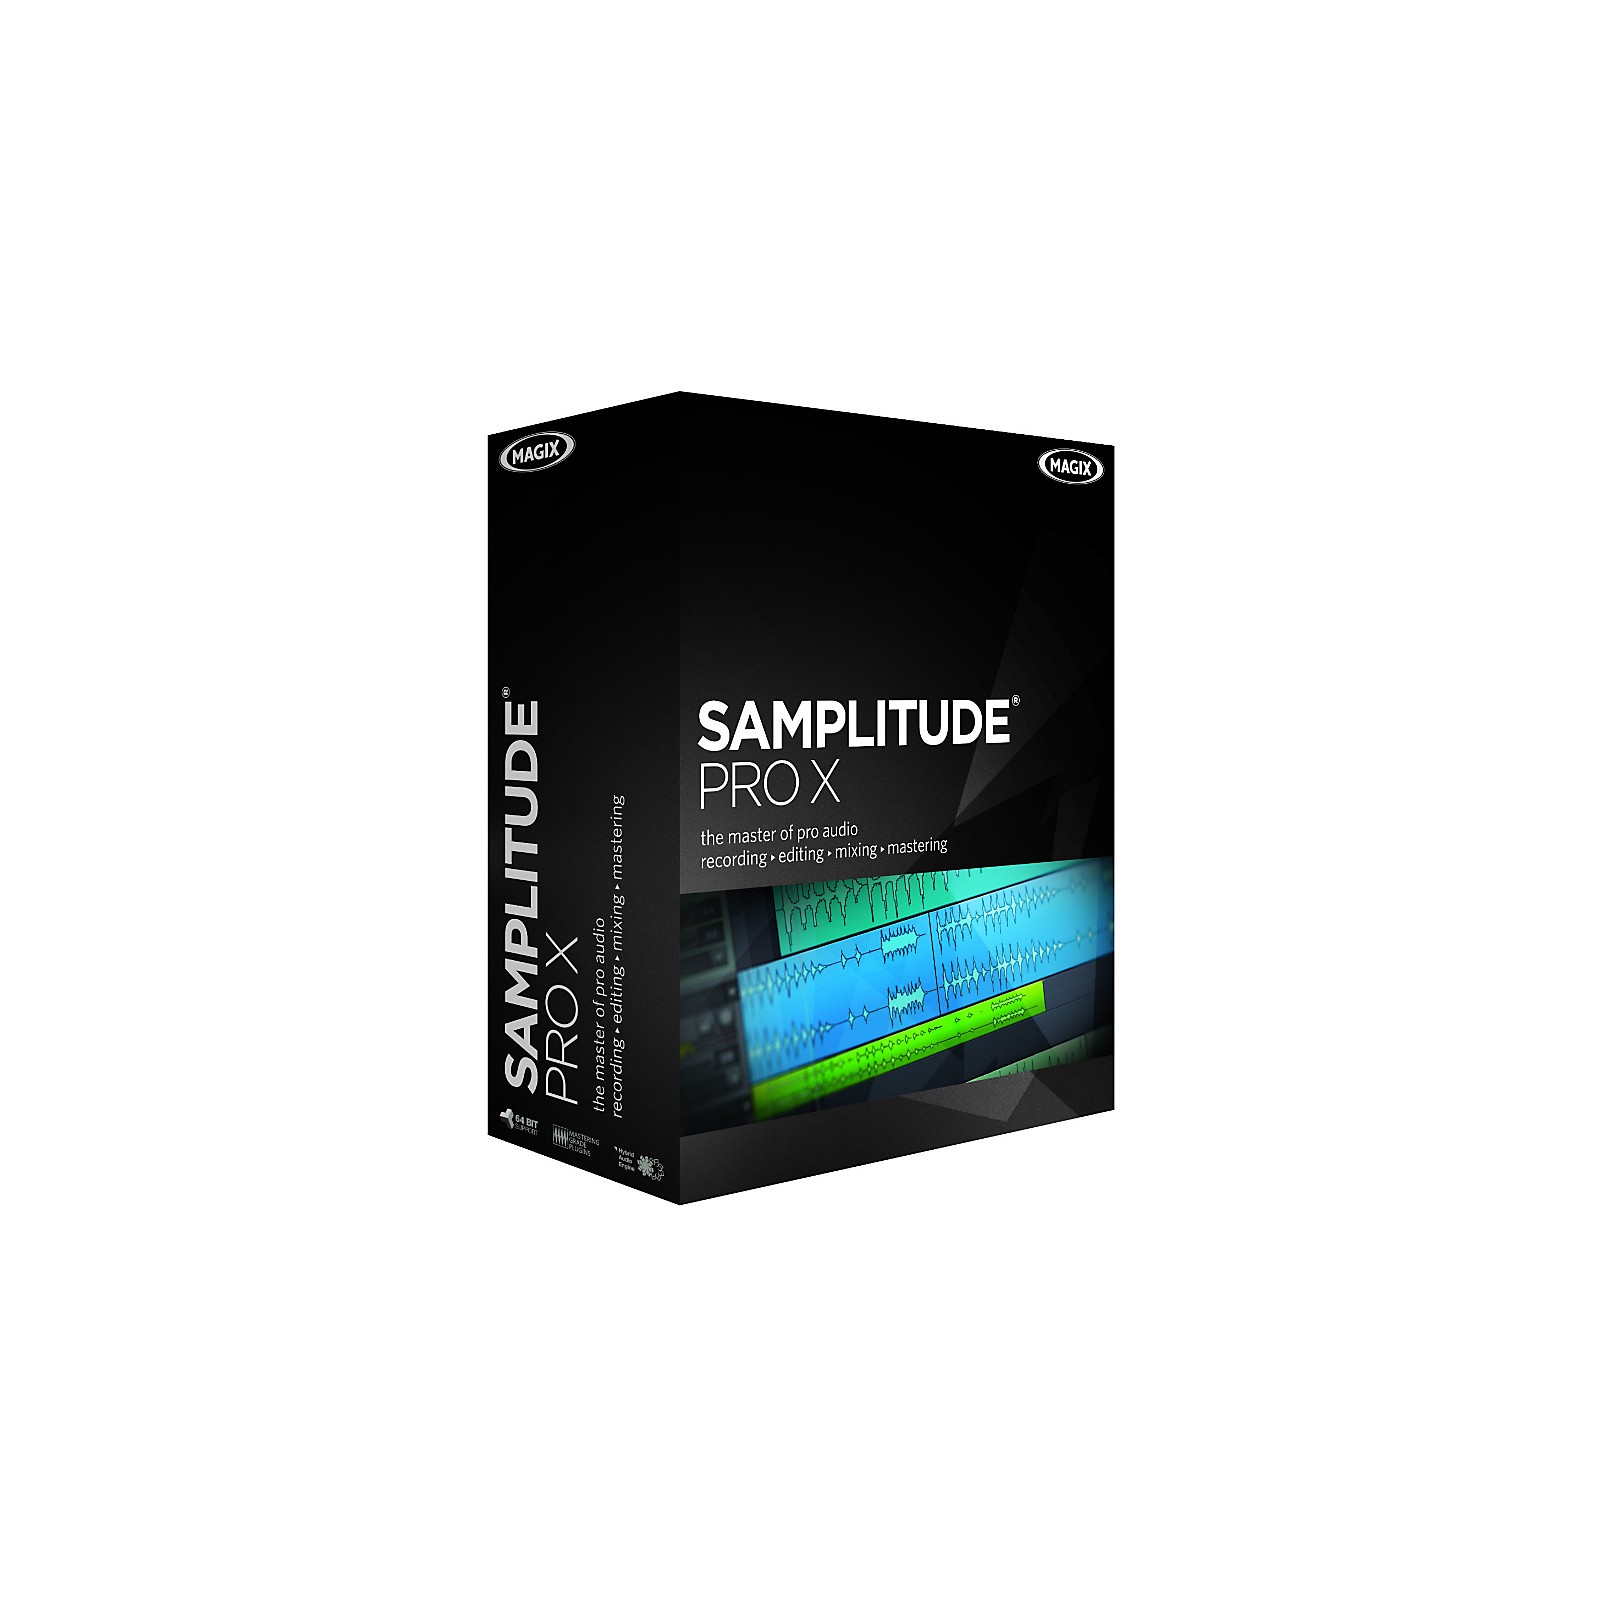 MAGIX Samplitude Pro X8 Suite 19.0.1.23115 for iphone download